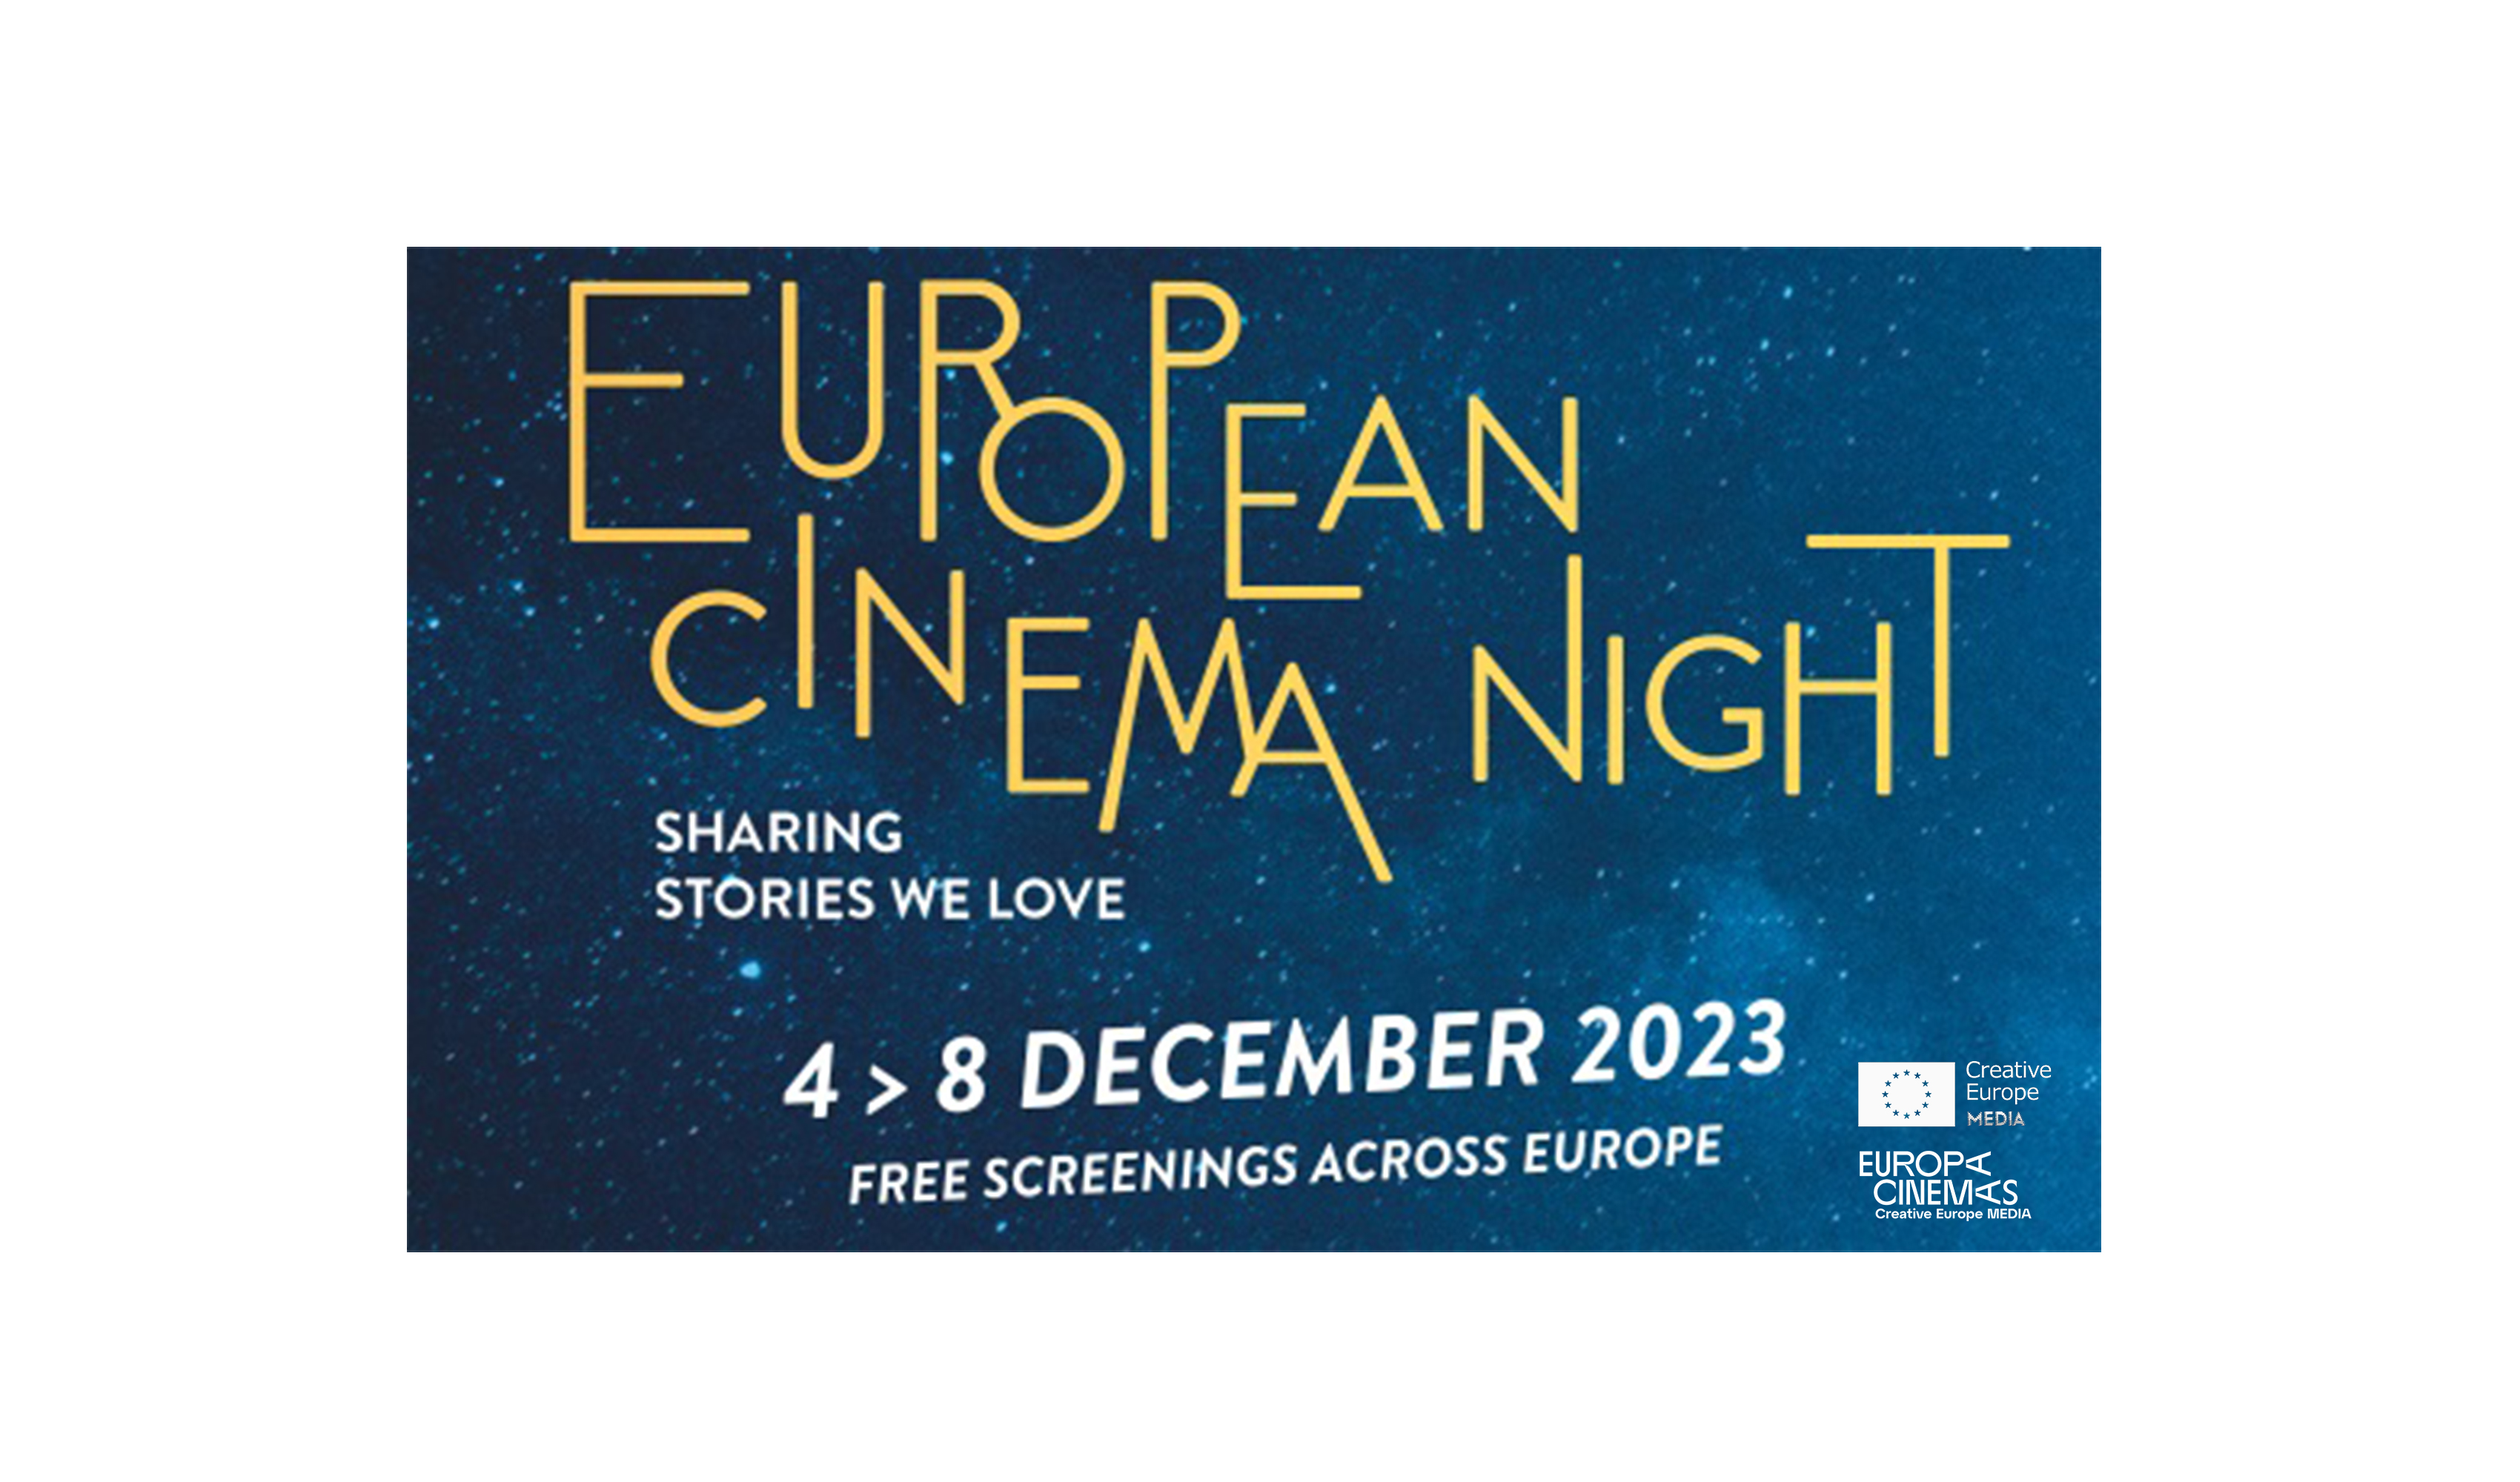 EUROPEAN CINEMA NIGHT